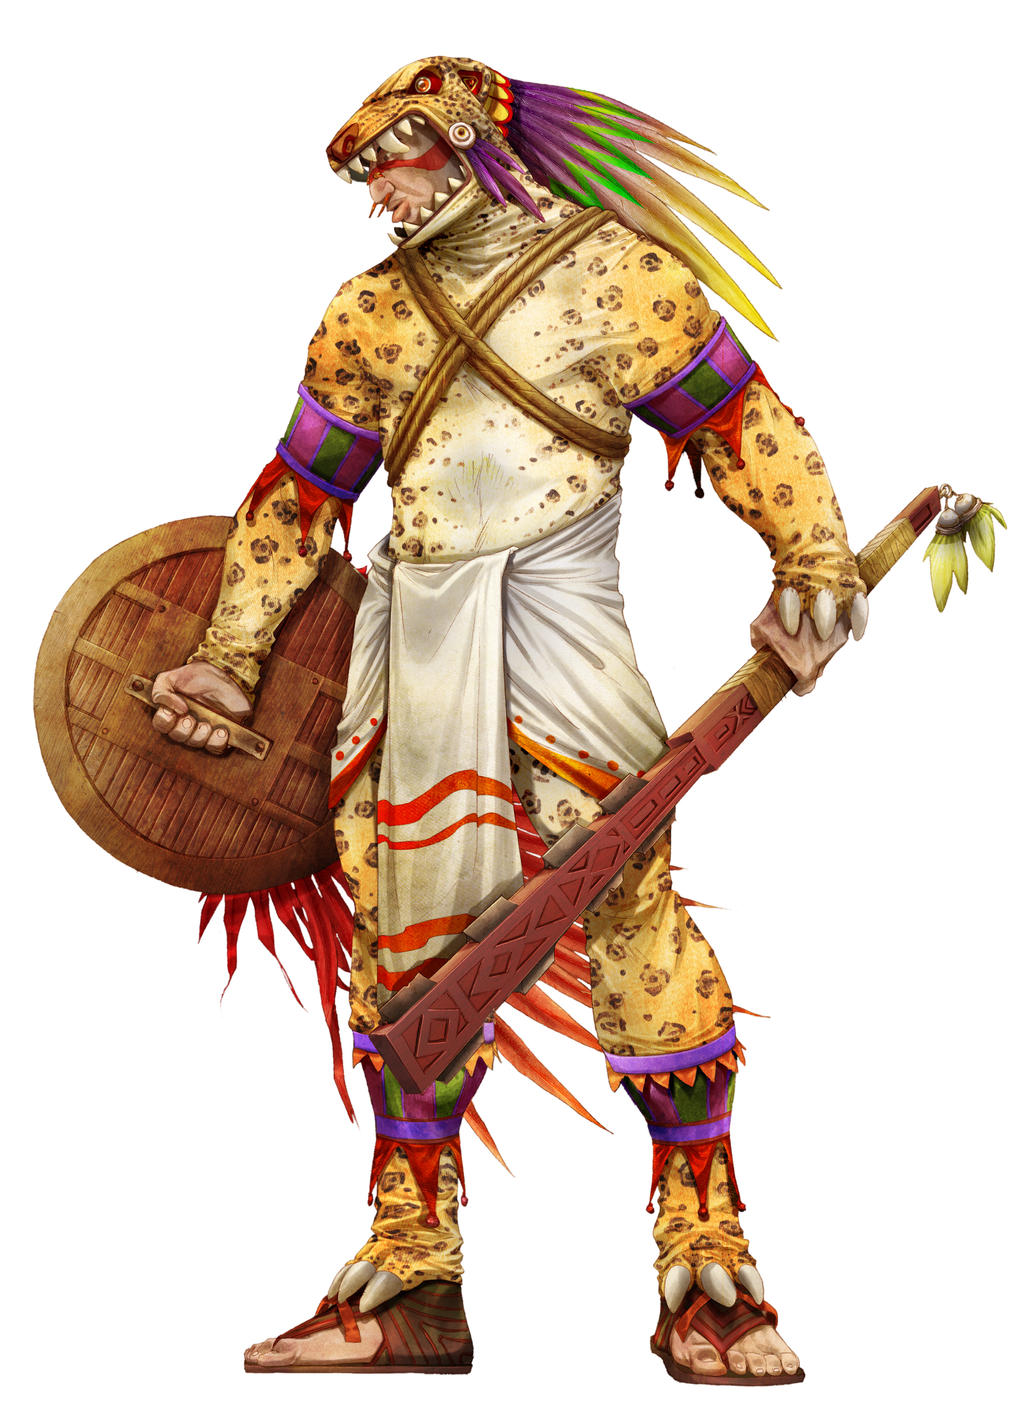 Deadliest Warrior: Aztec vs Maori Prelude by MadnessAbe on DeviantArt